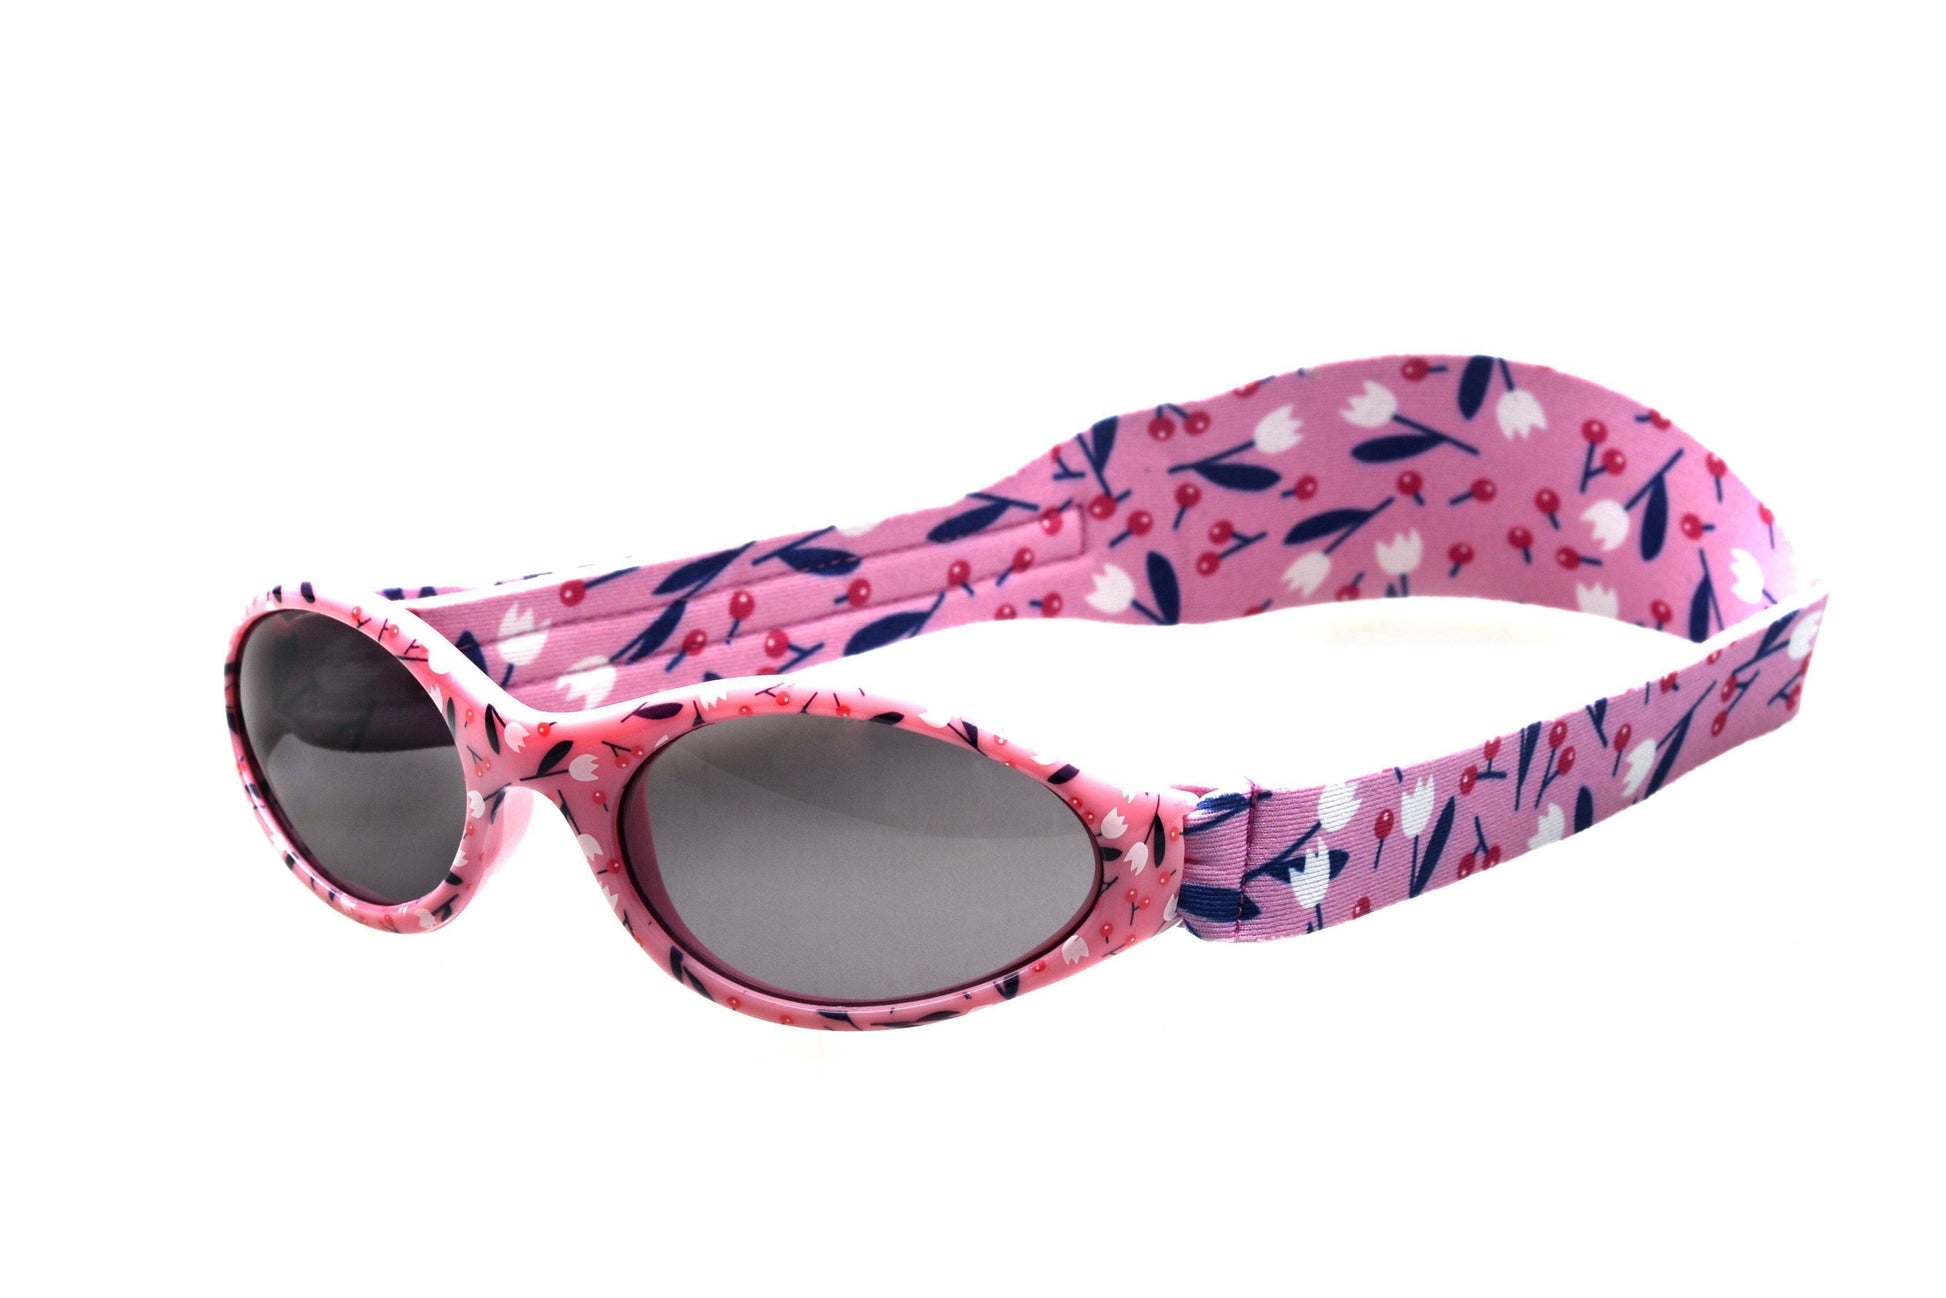 BANZ Sunglasses Toddler Sunglasses - Bubzee Polarized Wrap Around Petite Cherry Floral